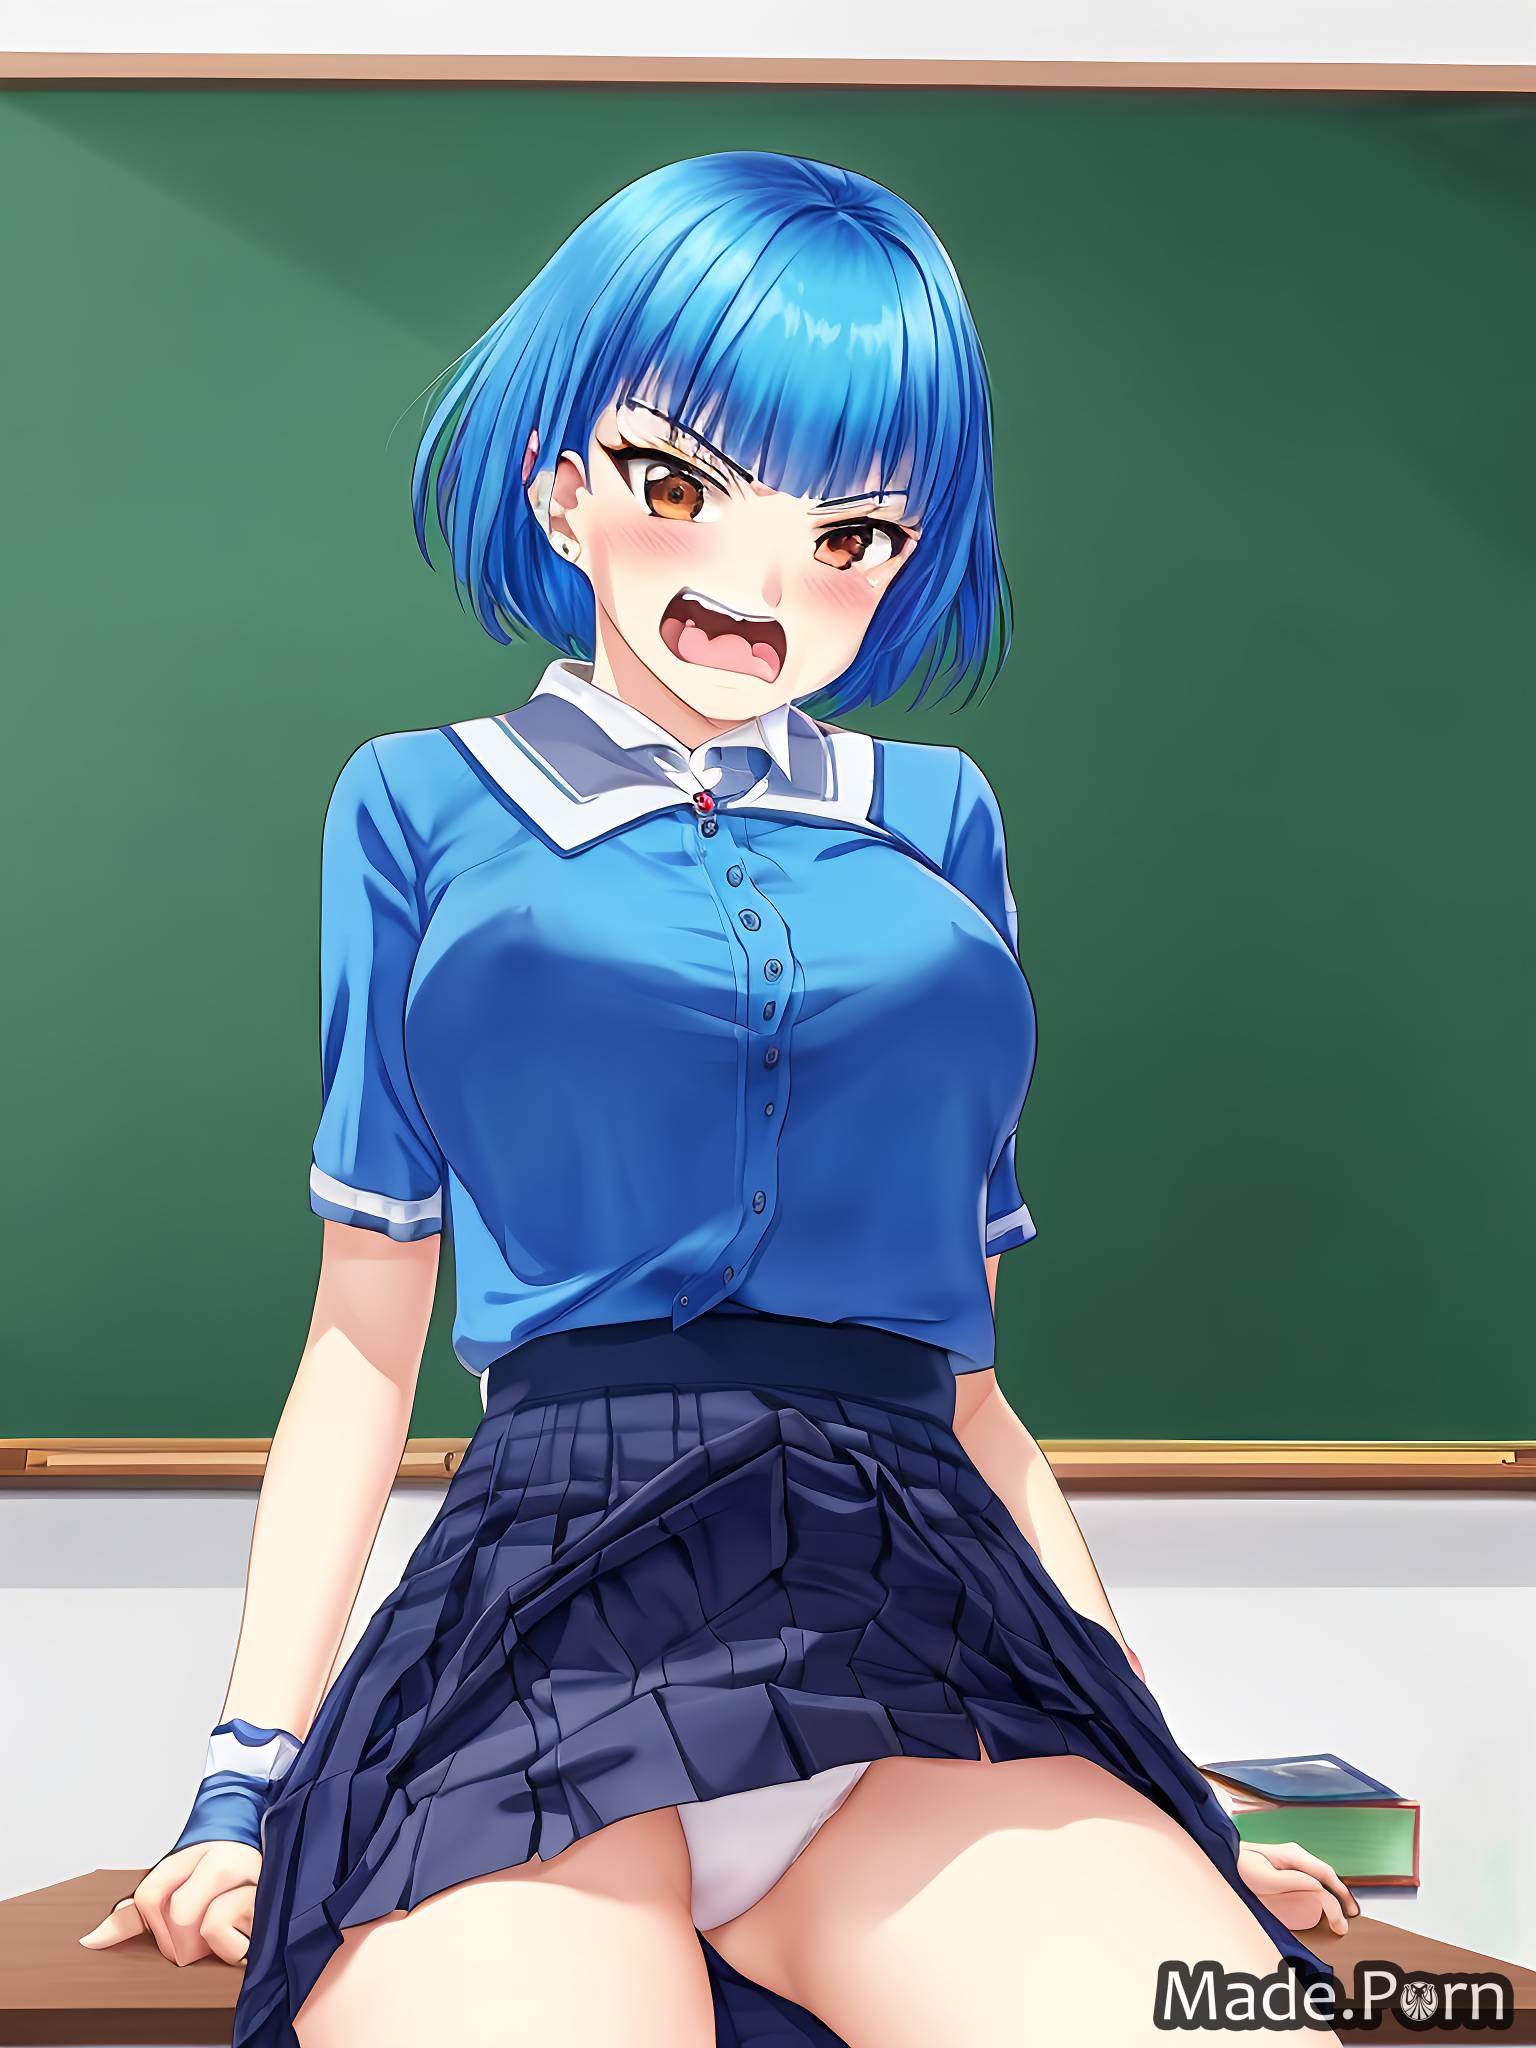 Anime Mad Porn - Porn image of classroom short hair upskirt anime angry short bangs hair  created by AI